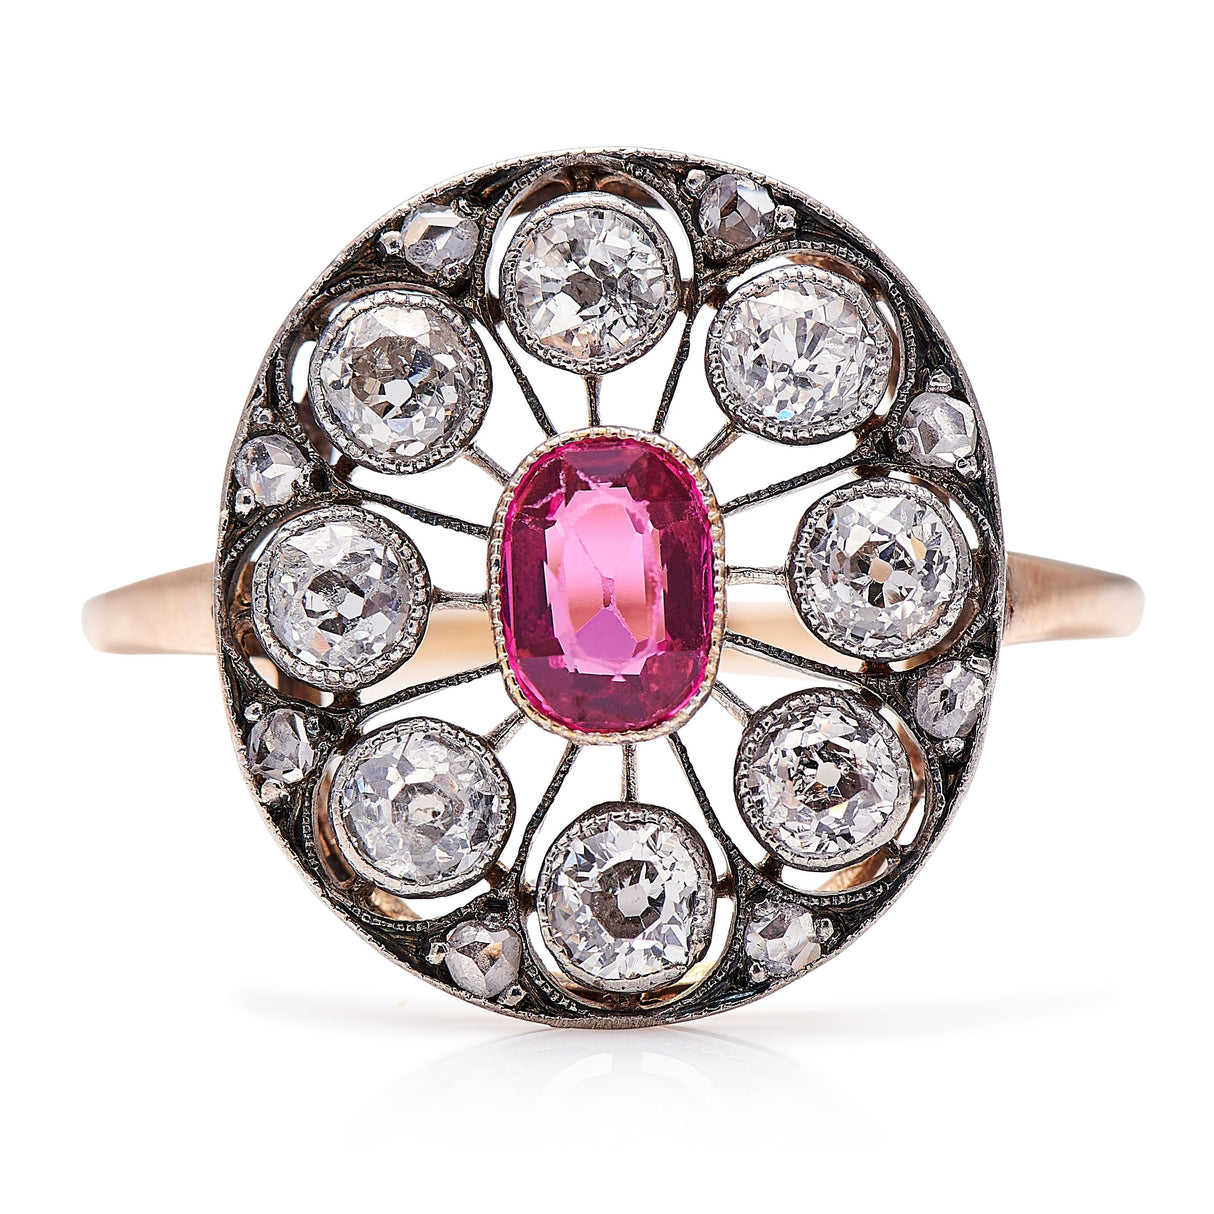 Belle-Époque-Platinum-Ruby-Ornate-Diamond-18-Carat-Gold-Ring-Vintage